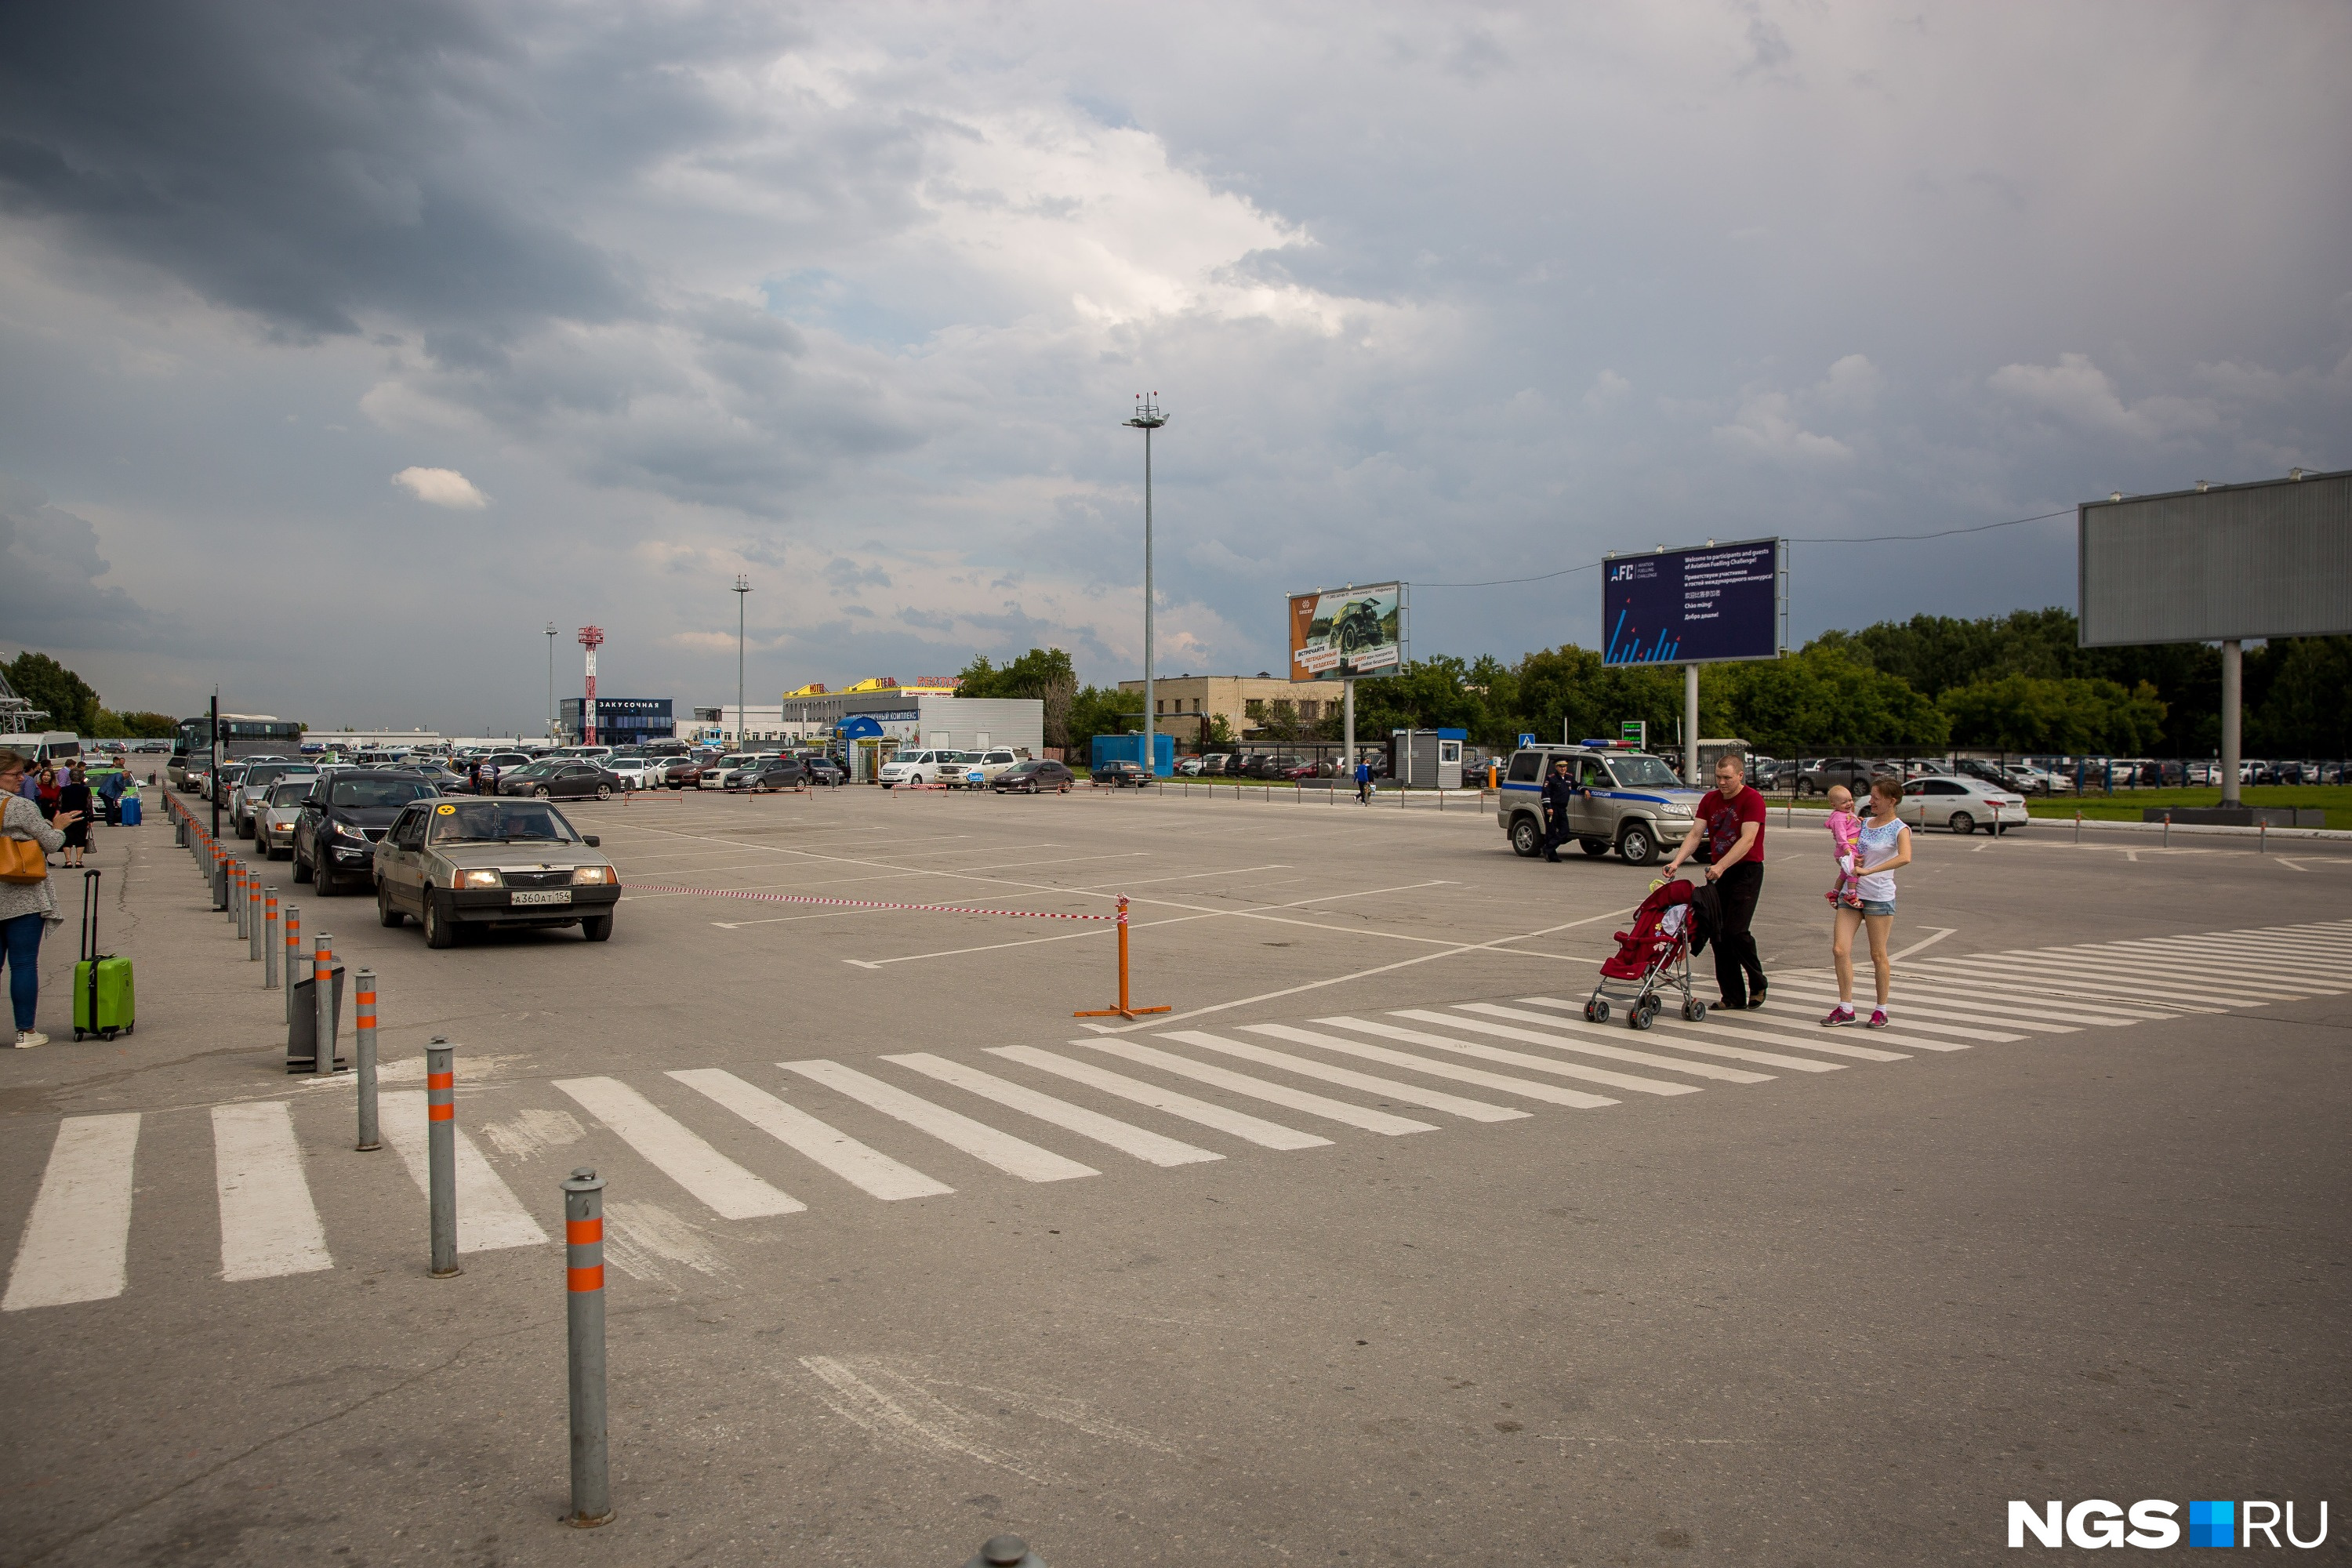 Парковка аэропорт новосибирск толмачево. Парковка перед аэропортом. Бесплатные парковки возле Толмачево.